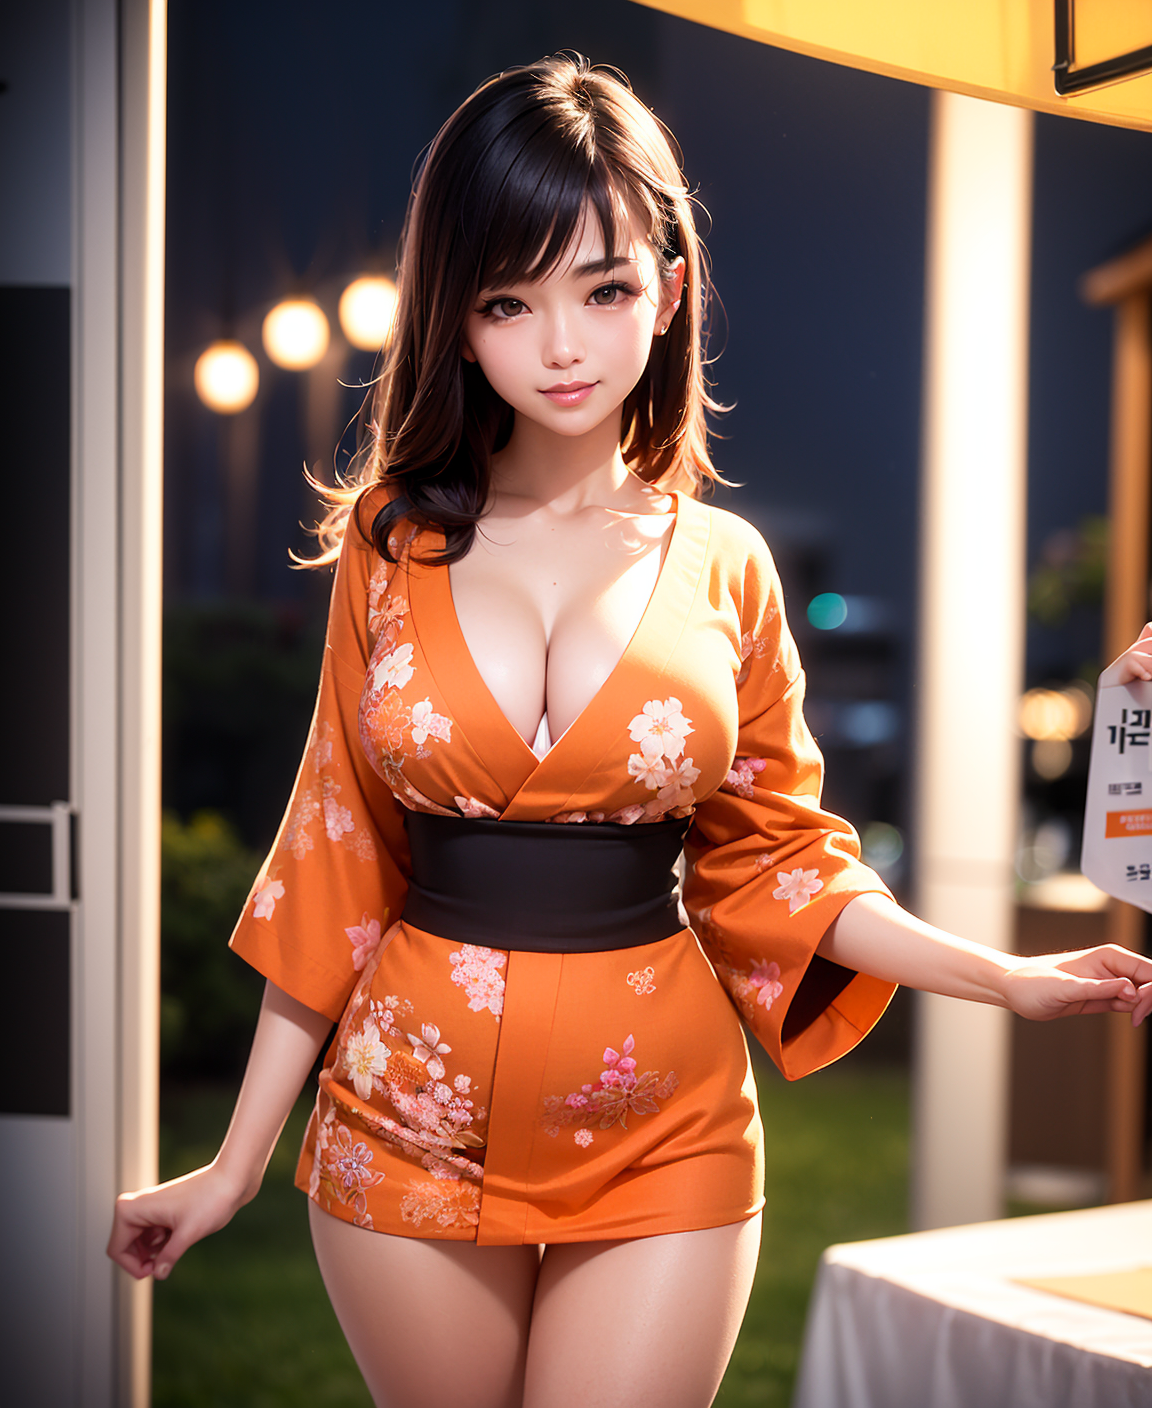 General 1152x1408 AIbot AI art night kimono long hair Asian big boobs portrait display women looking at viewer cleavage thighs